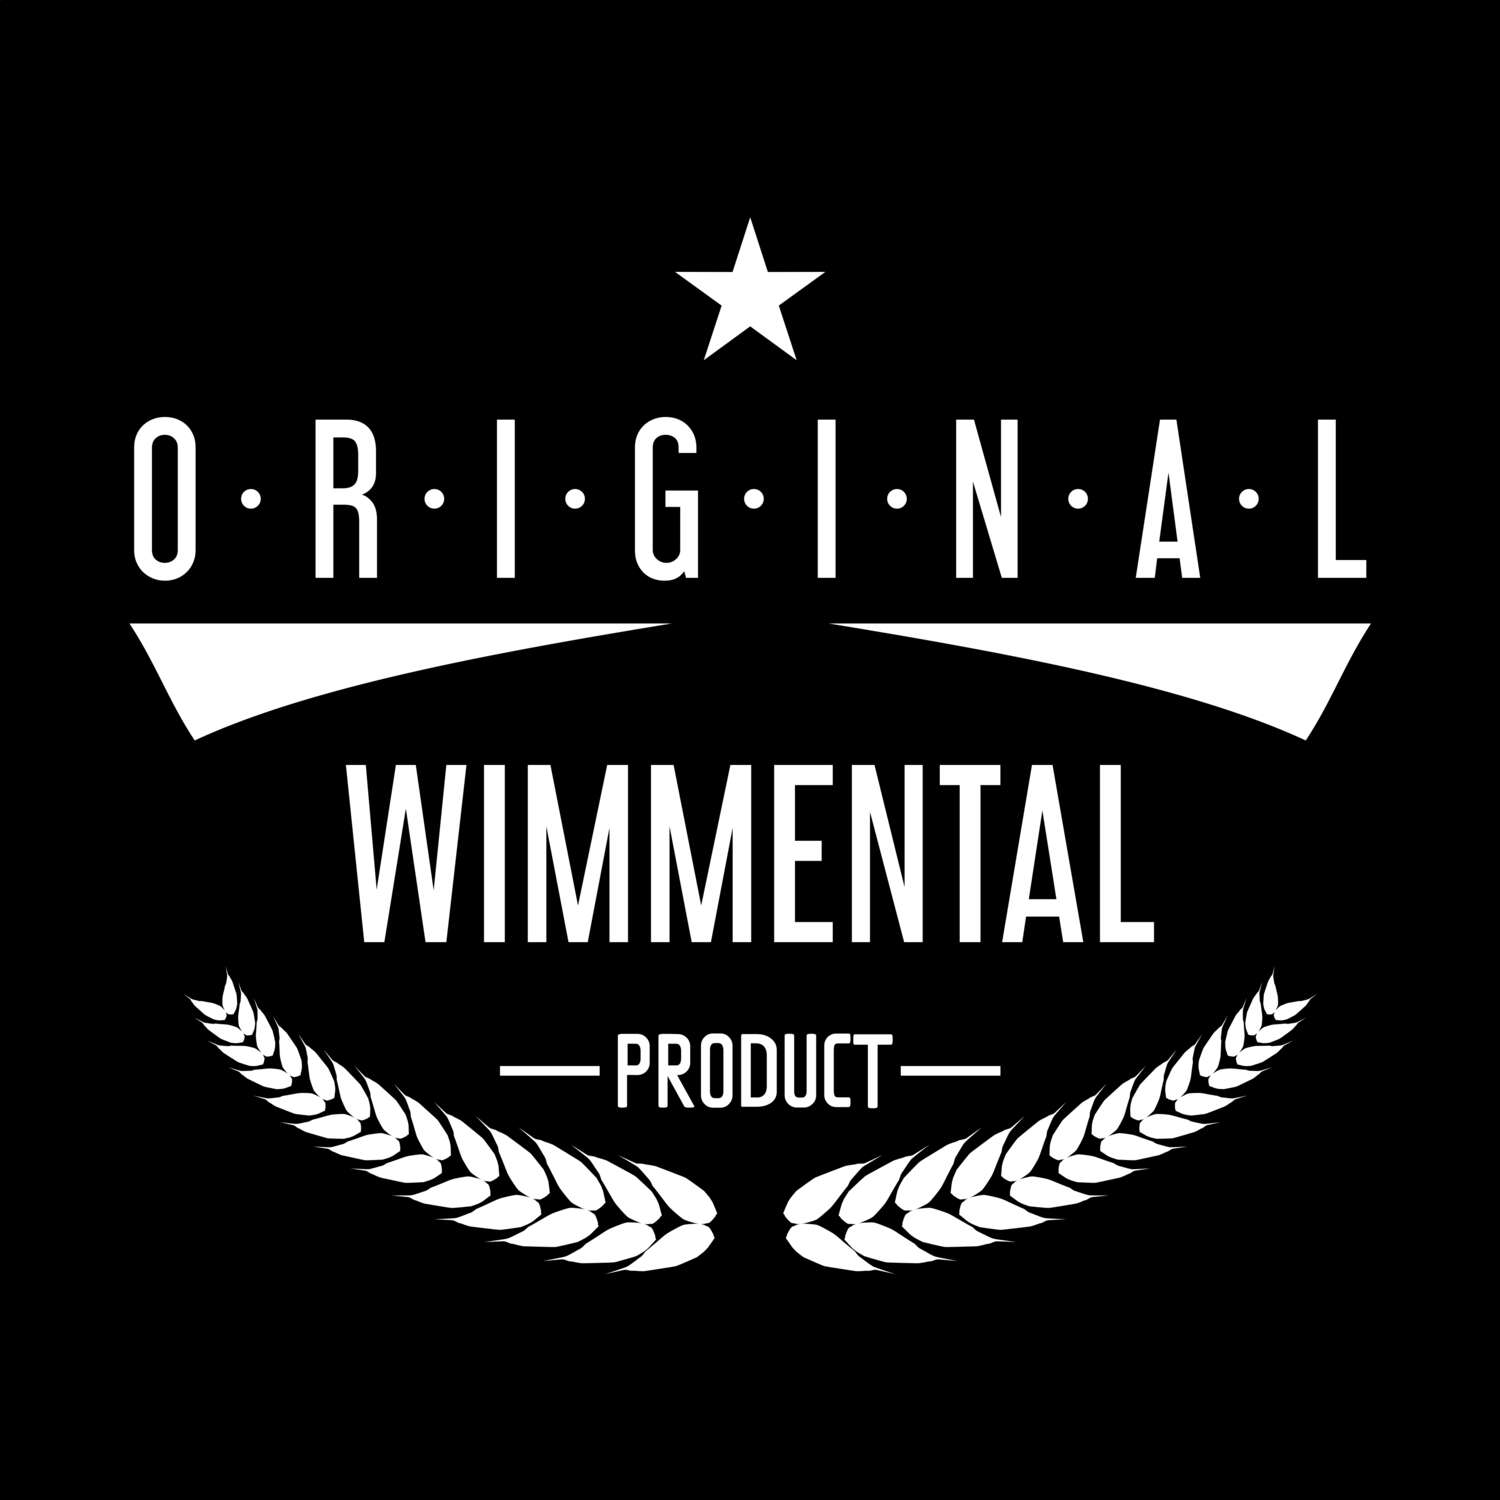 Wimmental T-Shirt »Original Product«